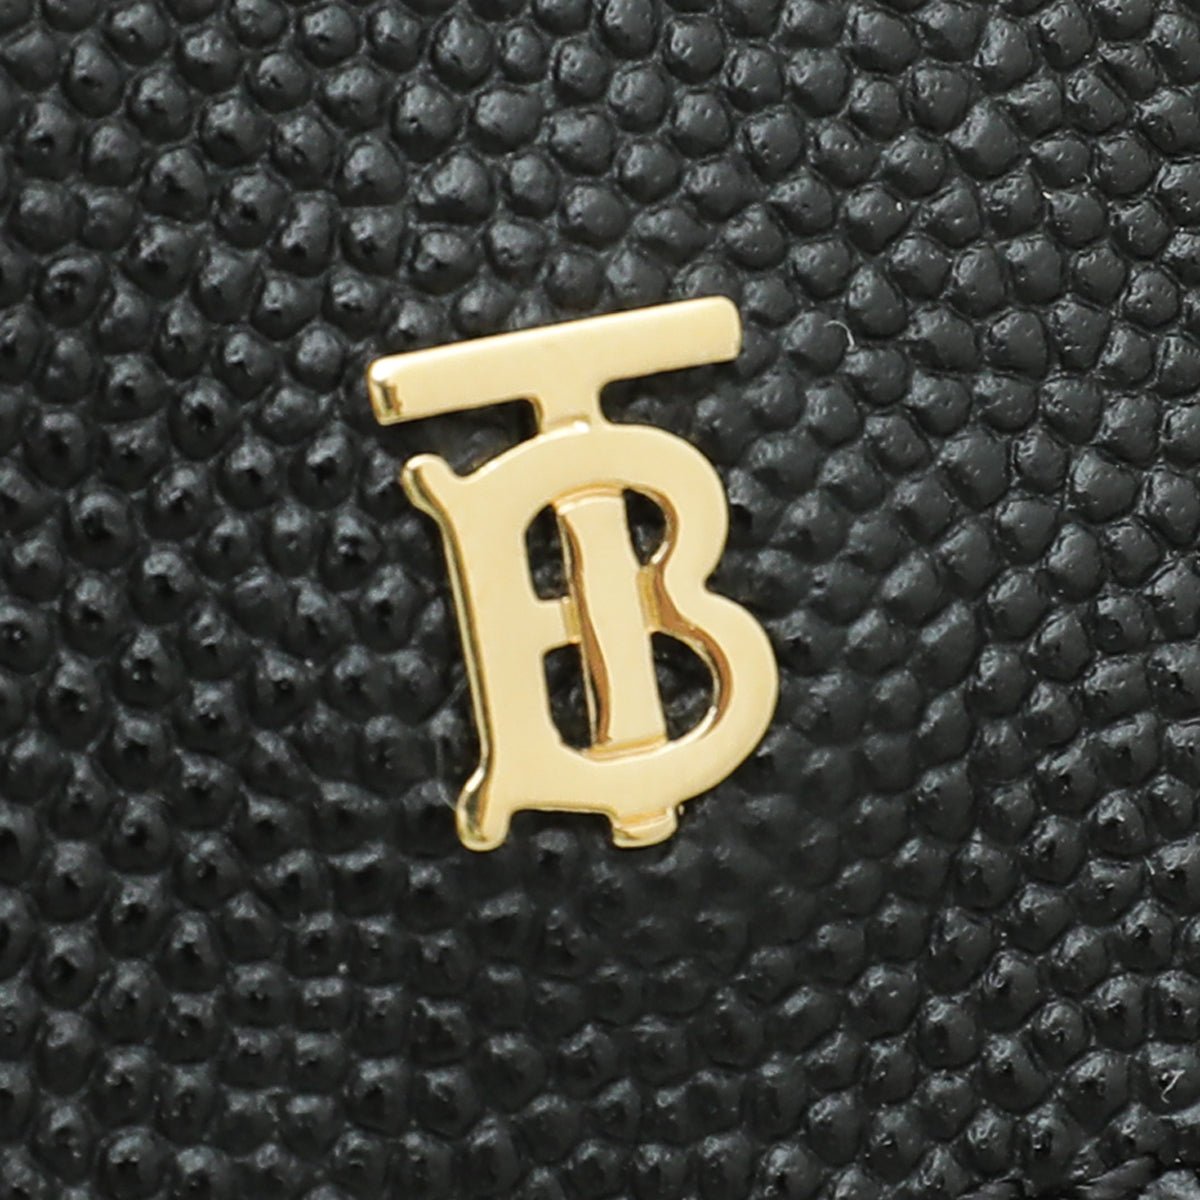 Burberry Tb Logo Chain Wallet in Black